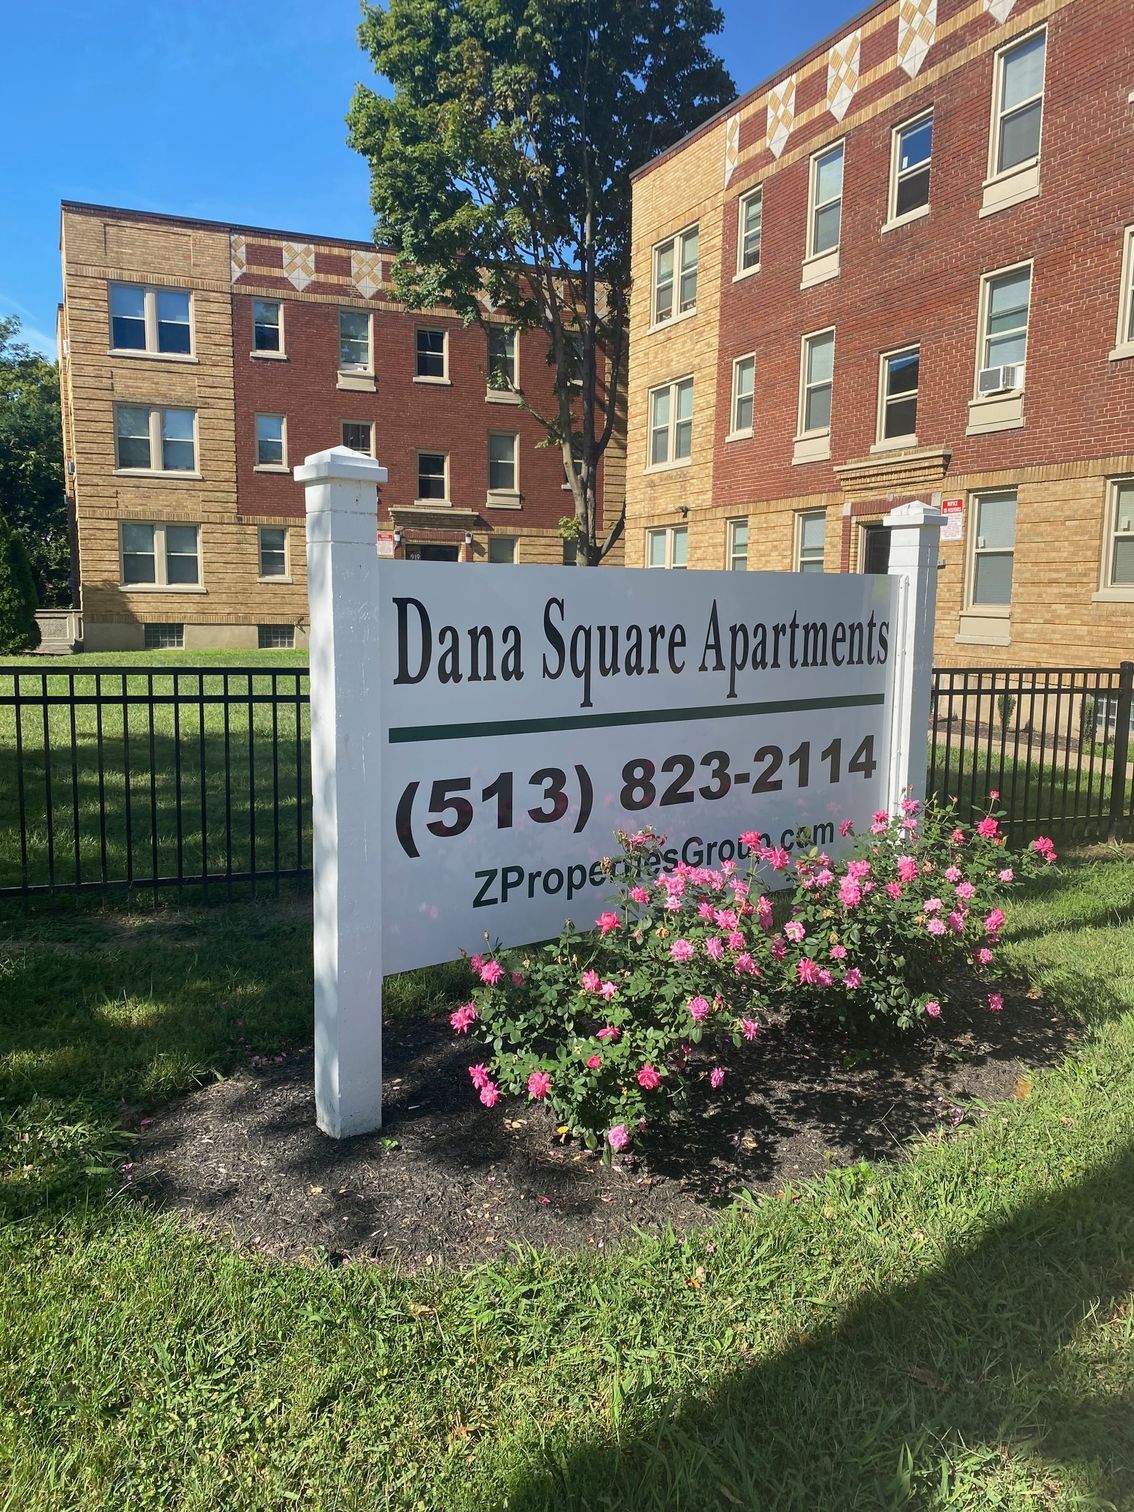 Dana Square Apartments - Outdoor sign